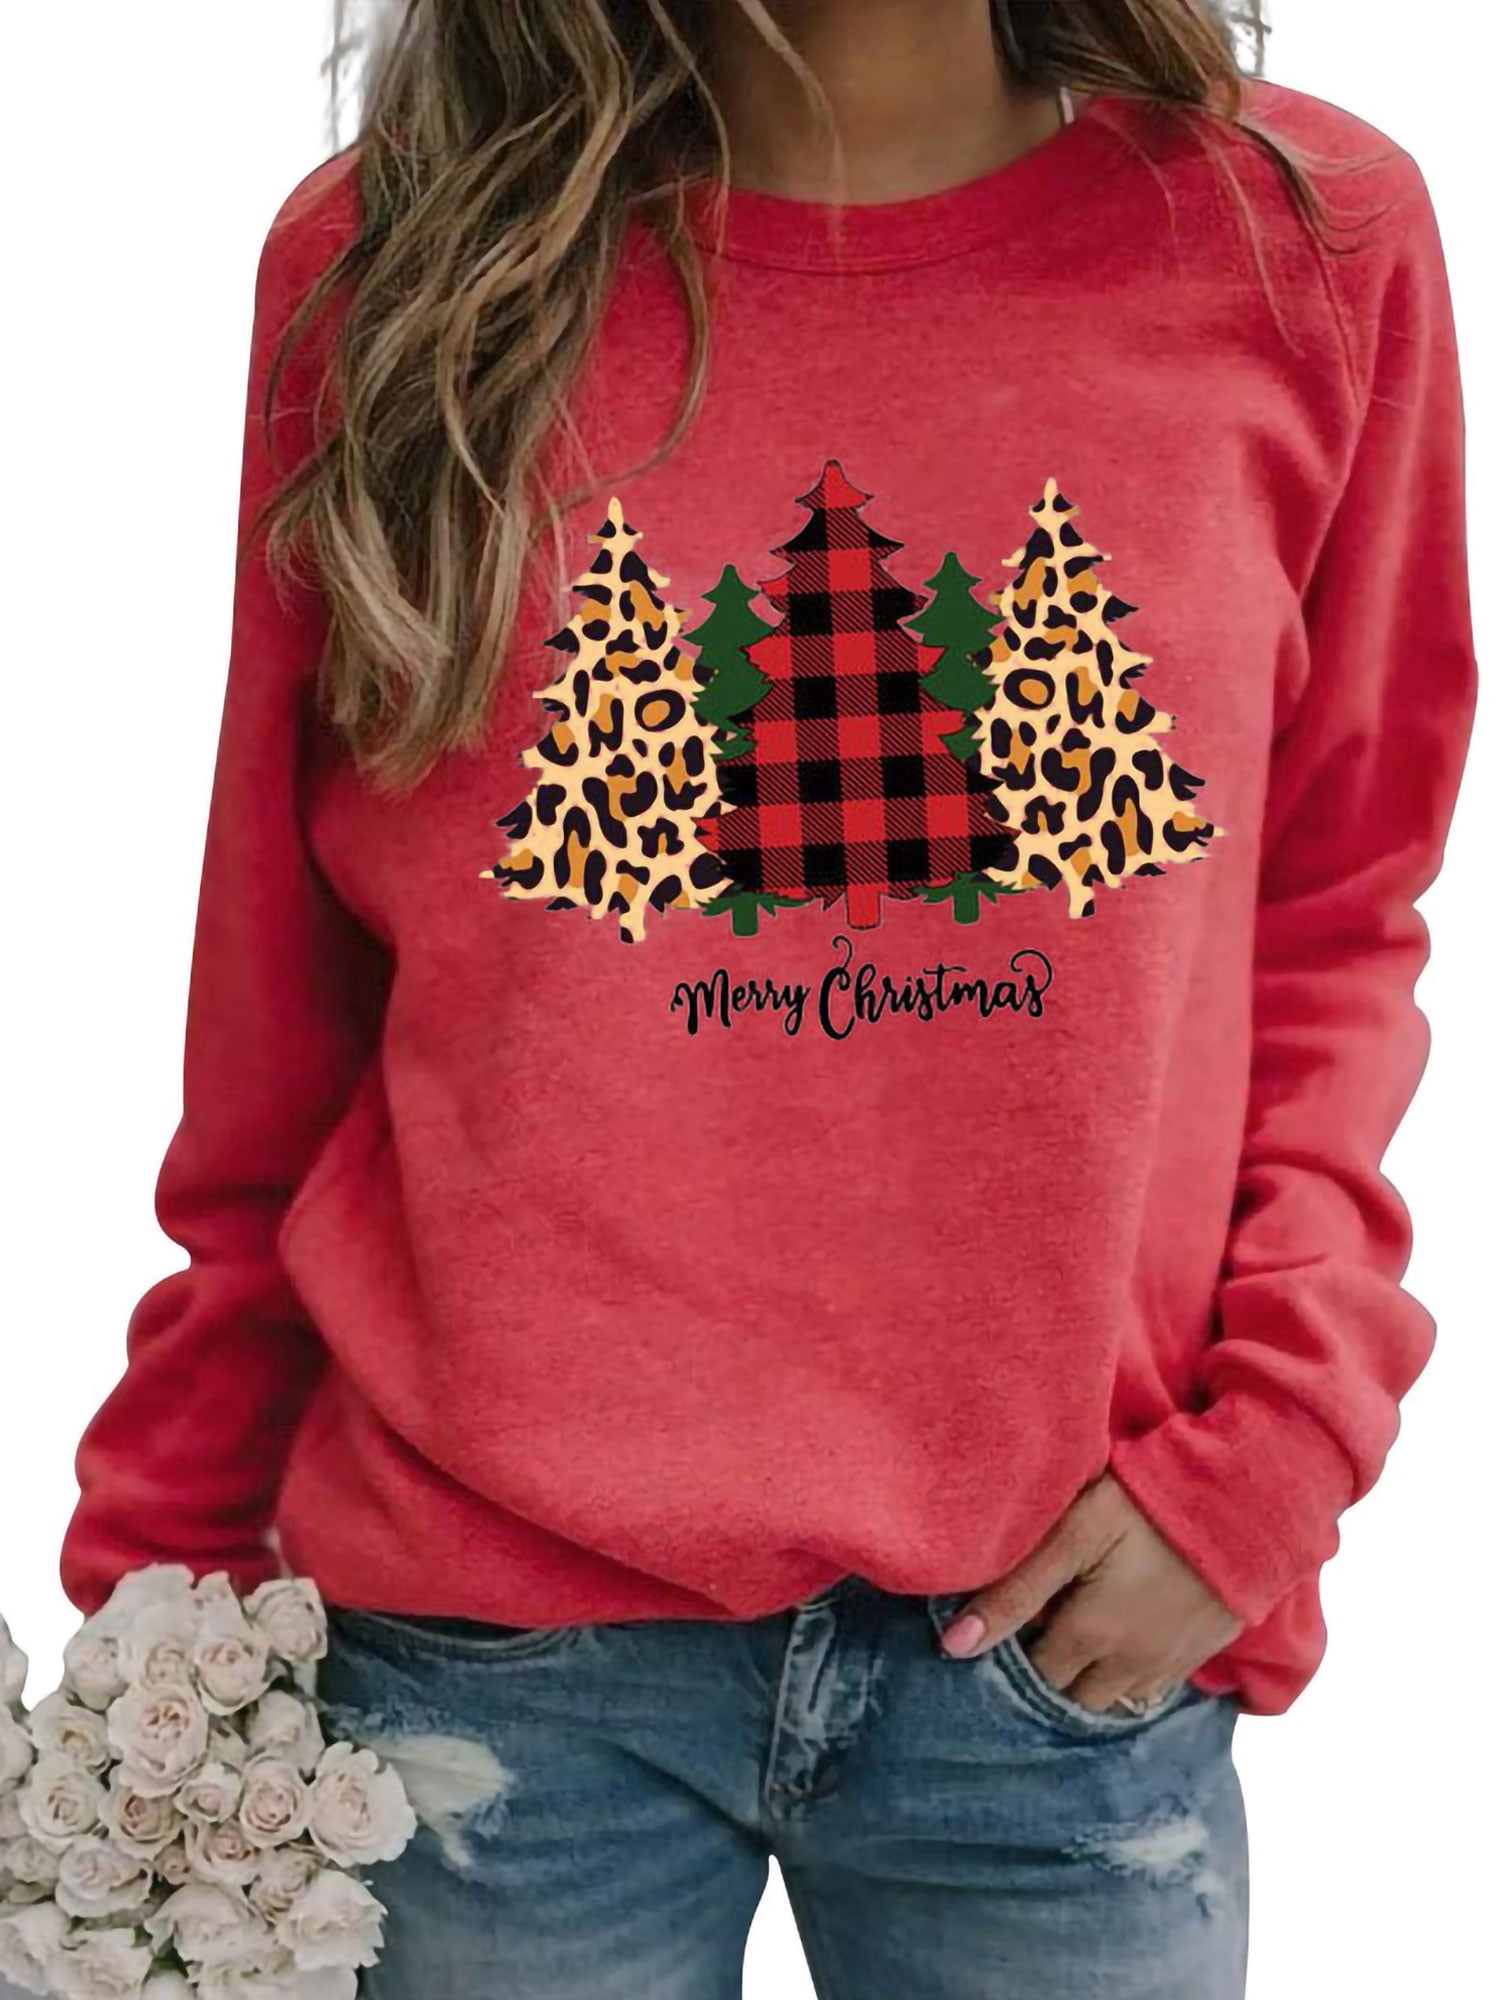 Womens Christmas Sweatshirt Merry Christmas Tree Graphic Tops Cute Joy Santa Funny Wine Glasses Shirts Tops Blouse